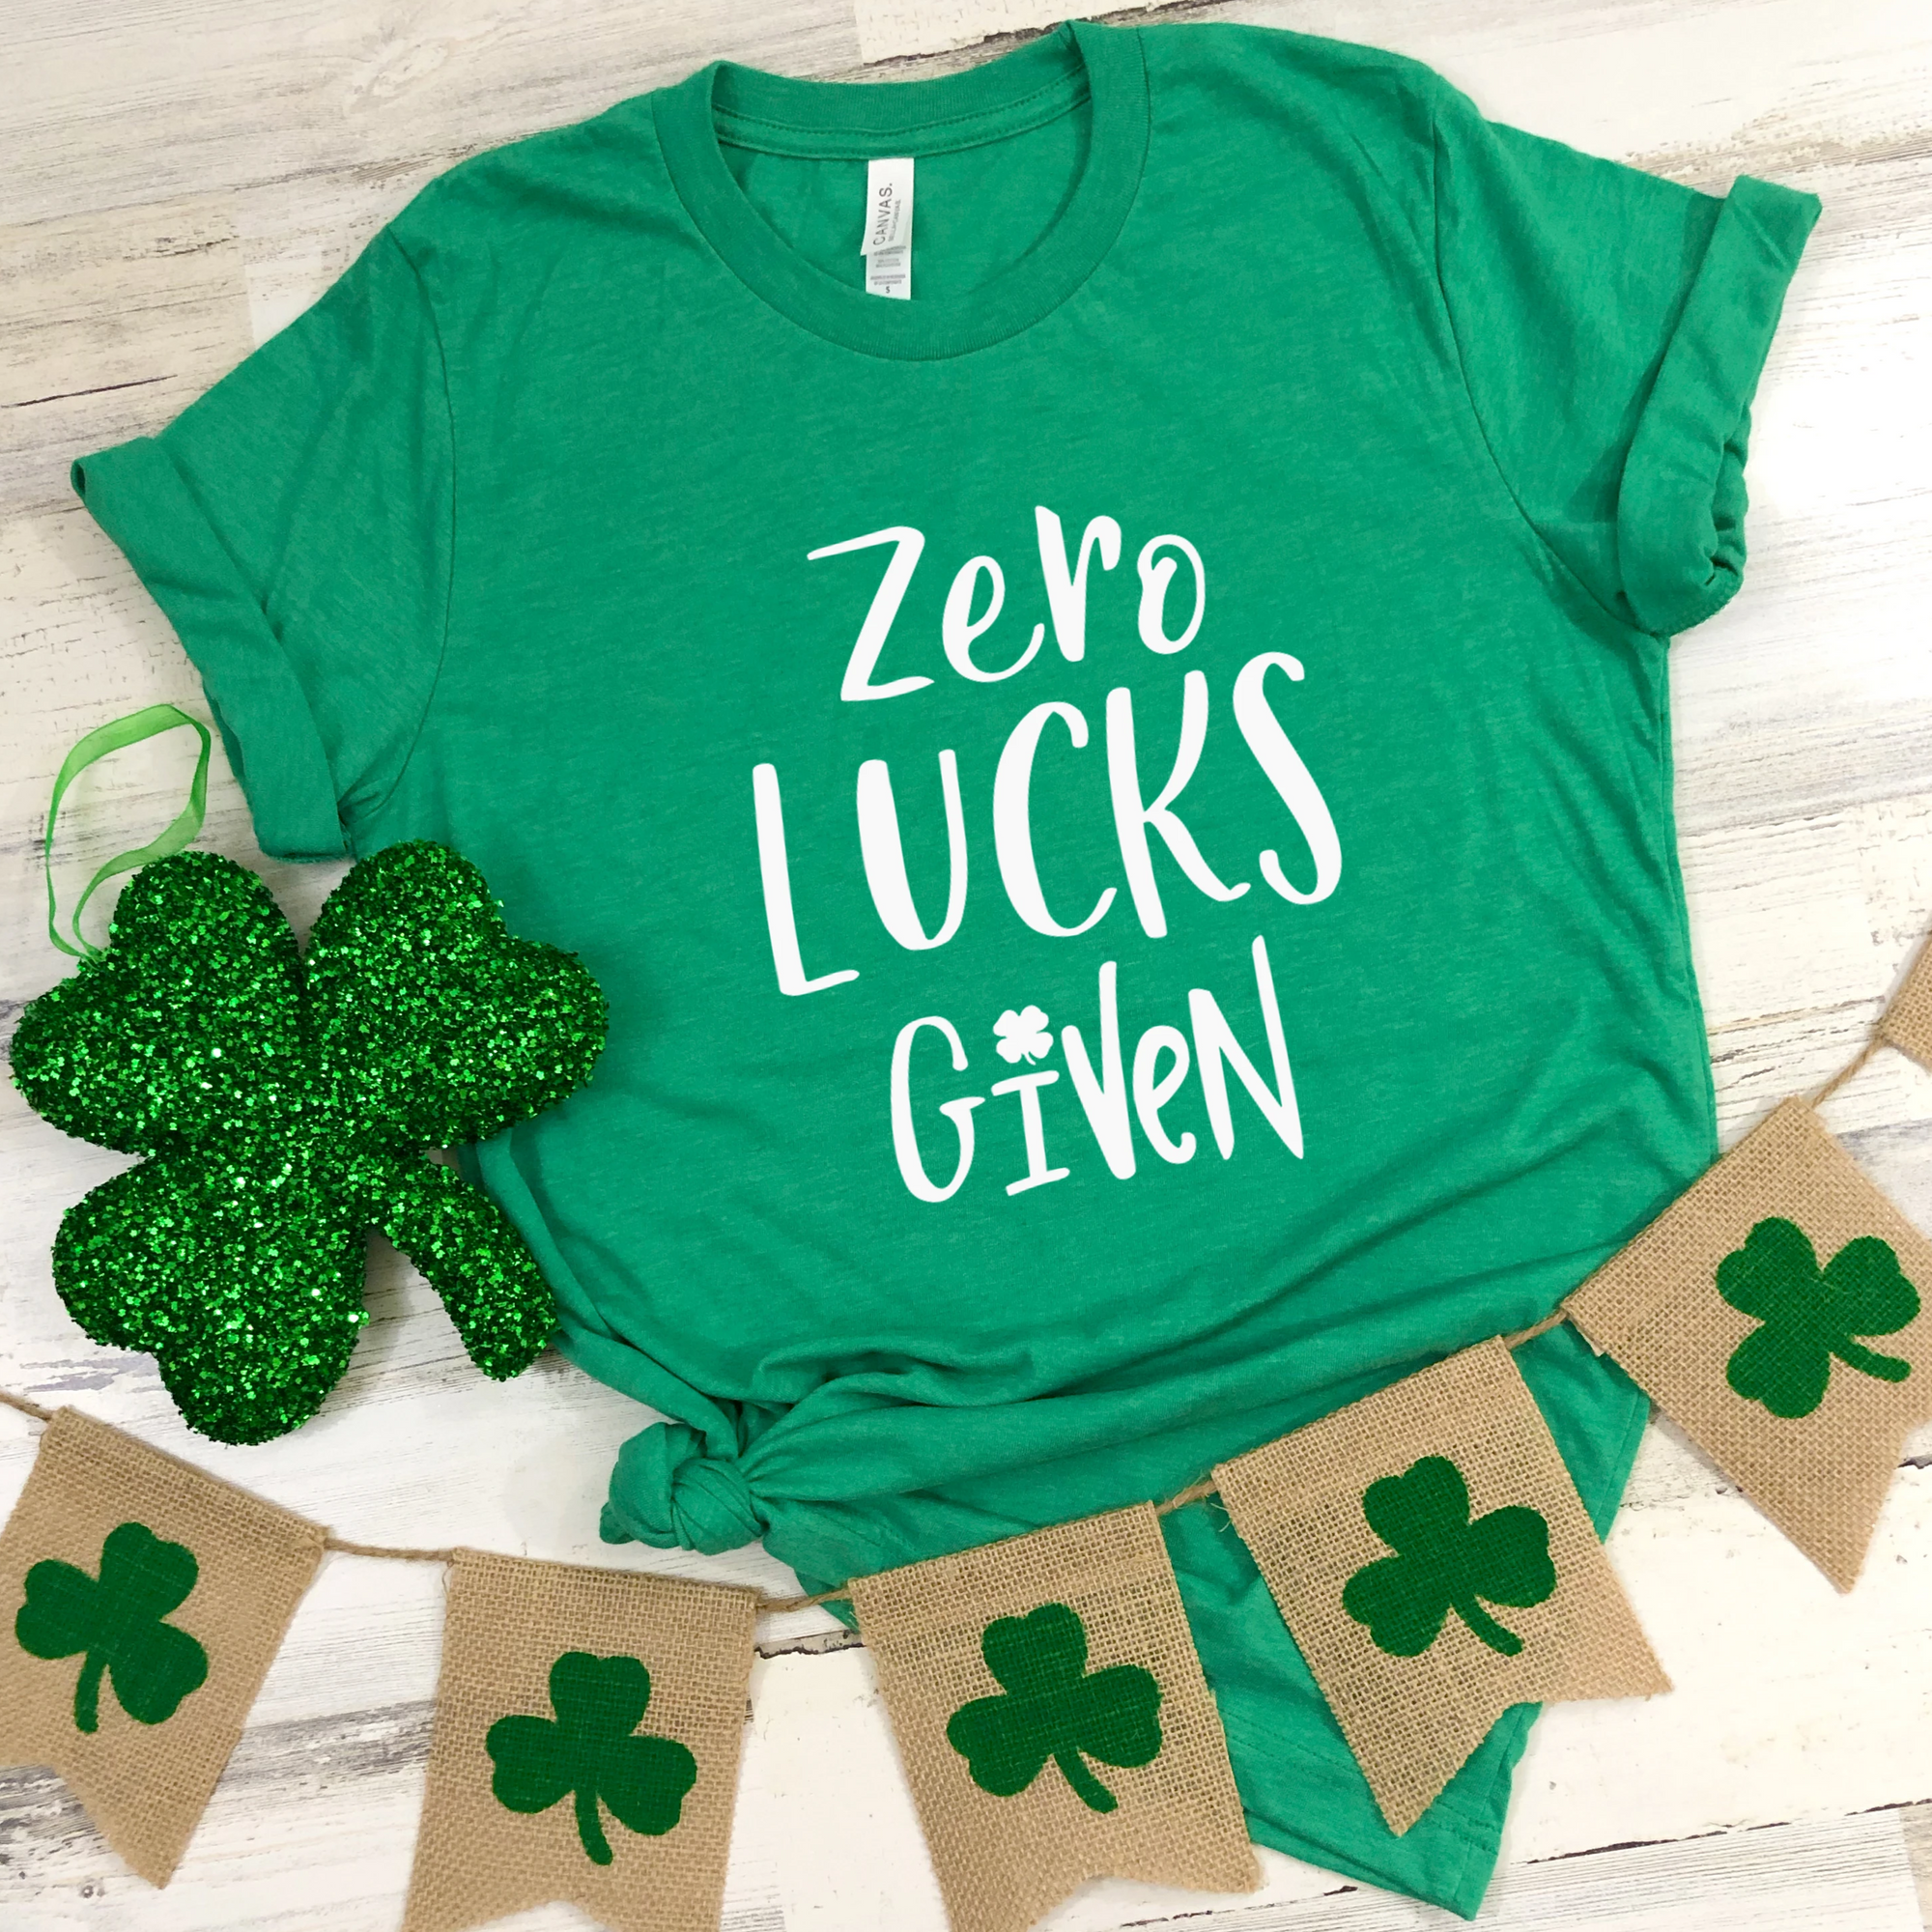 Zero Lucks Given St Patrick's Day Tee